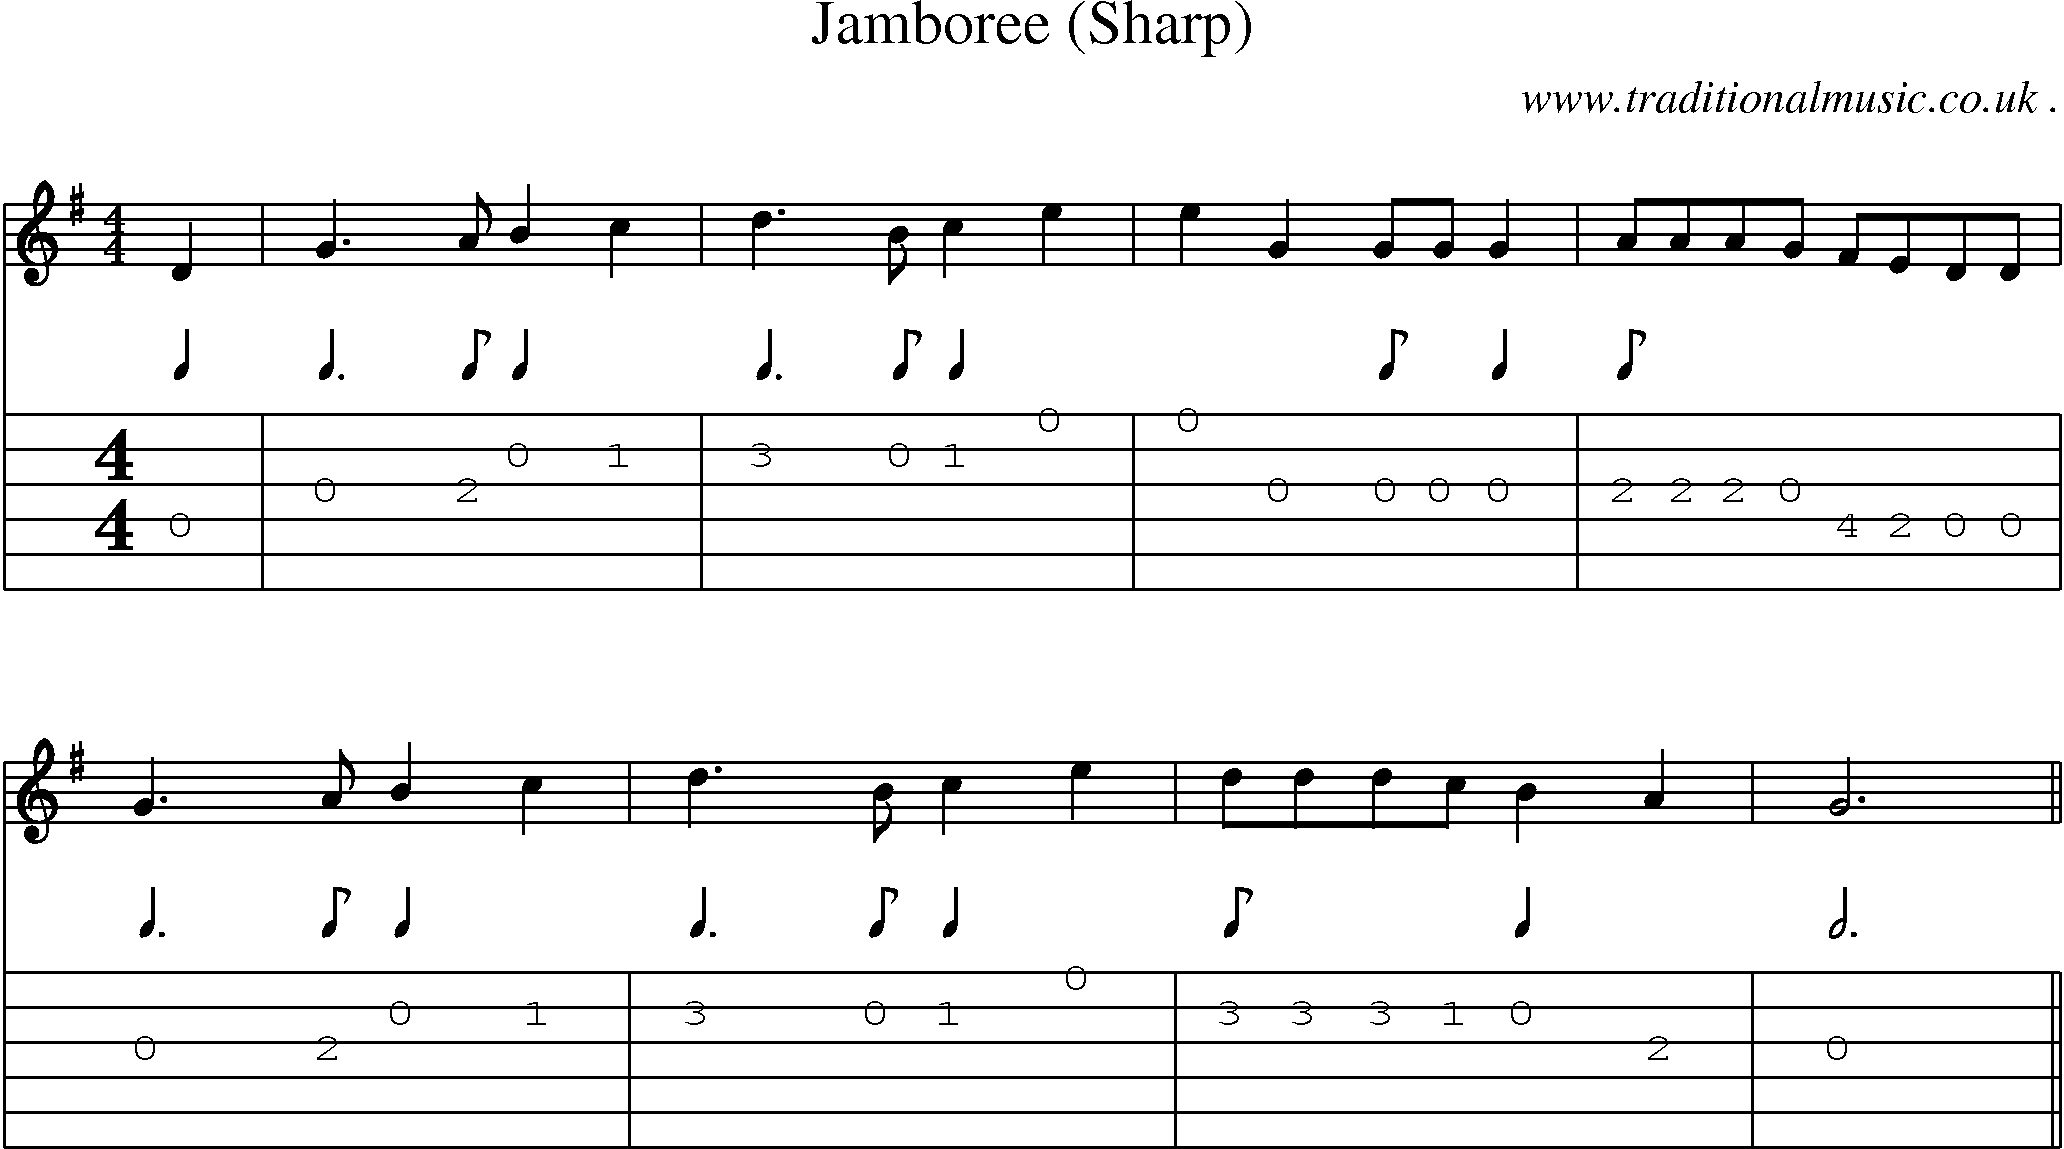 Sheet-Music and Guitar Tabs for Jamboree (sharp)